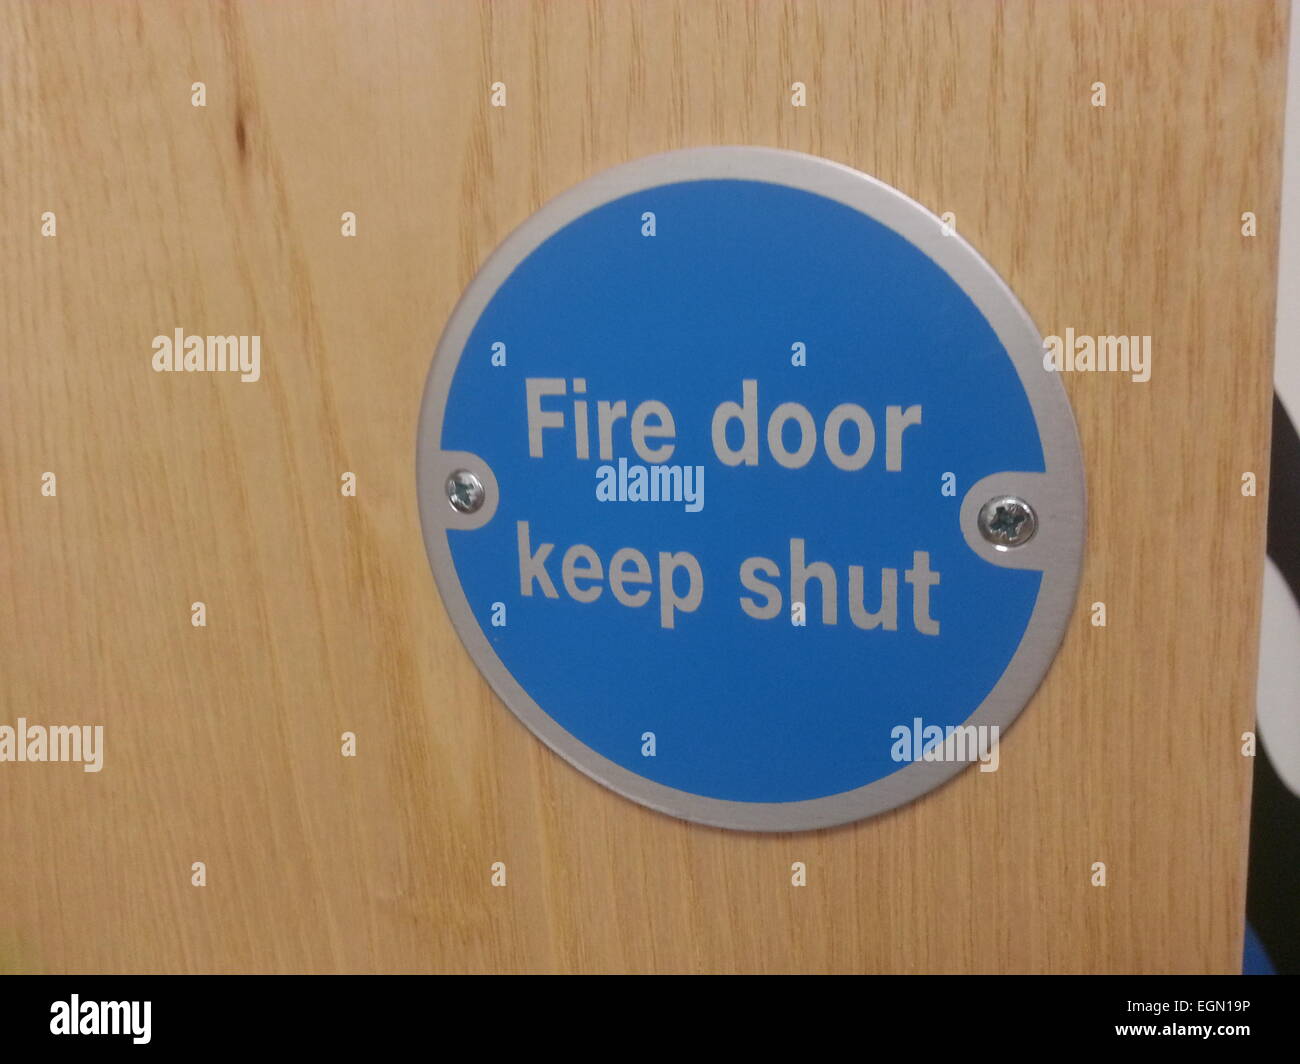 Fire door, Keep shut sign Stock Photo